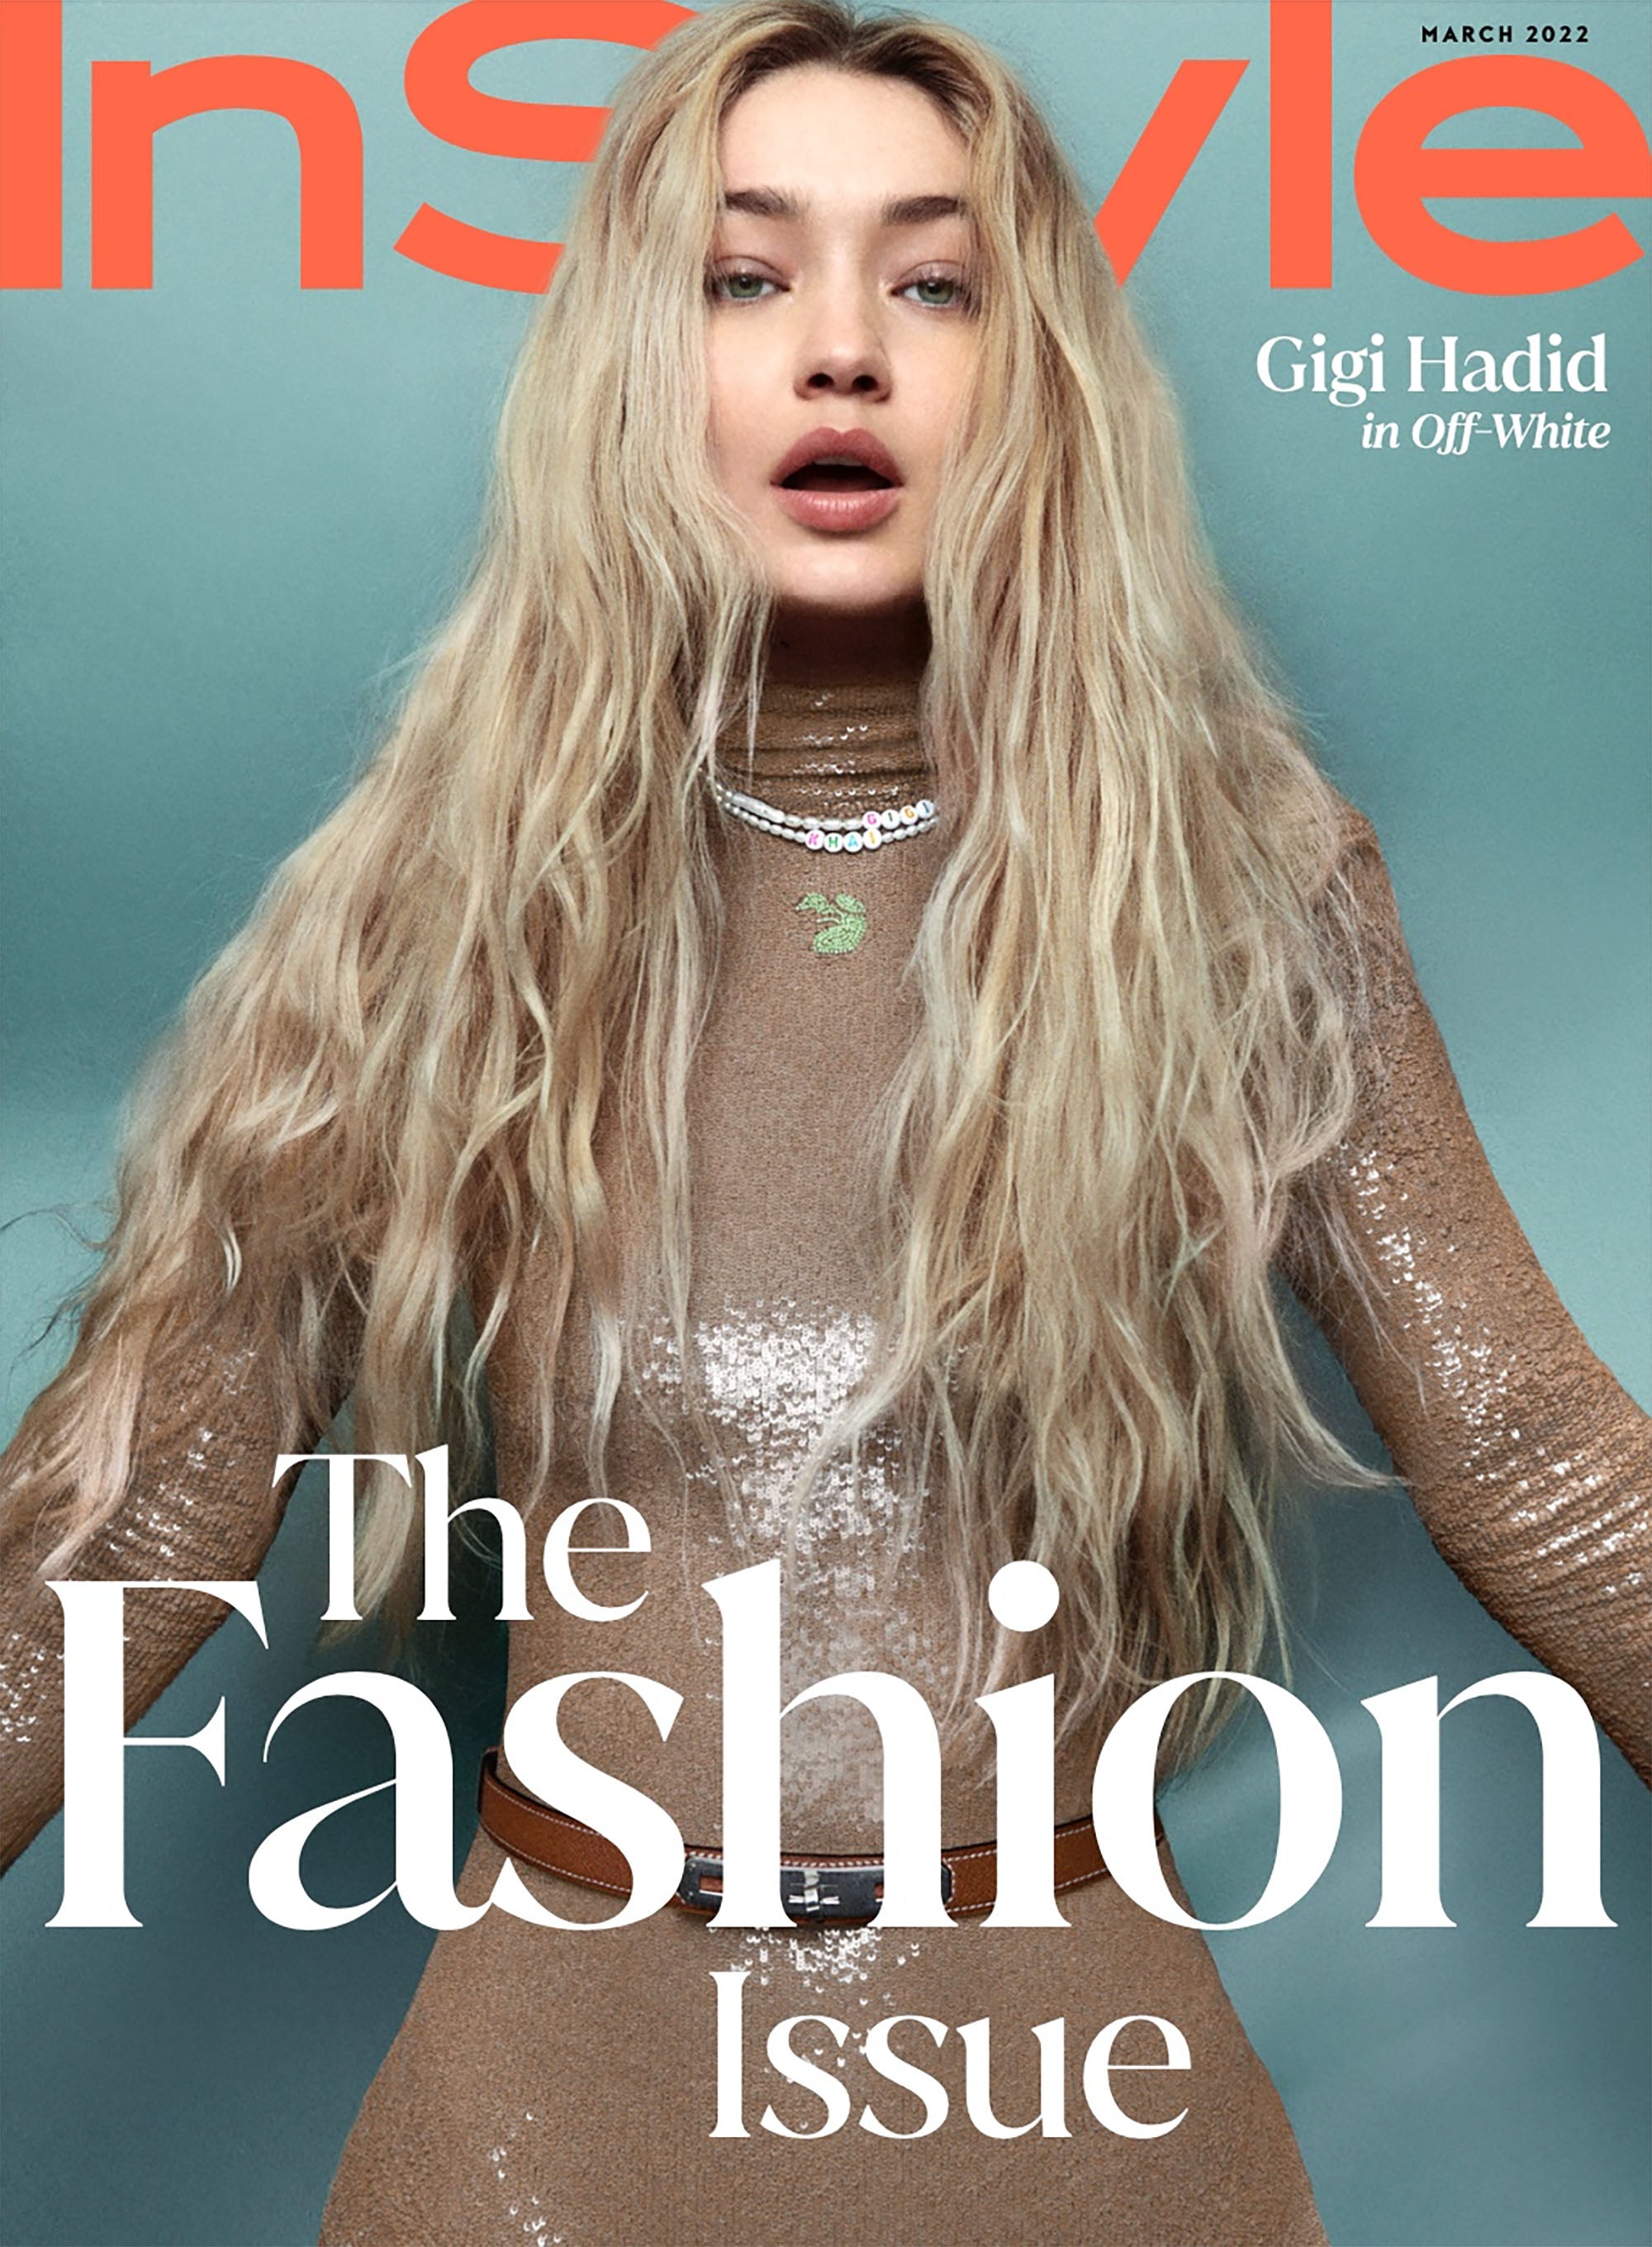 Instyle: The Unabashed Joy of Being Gigi Hadid